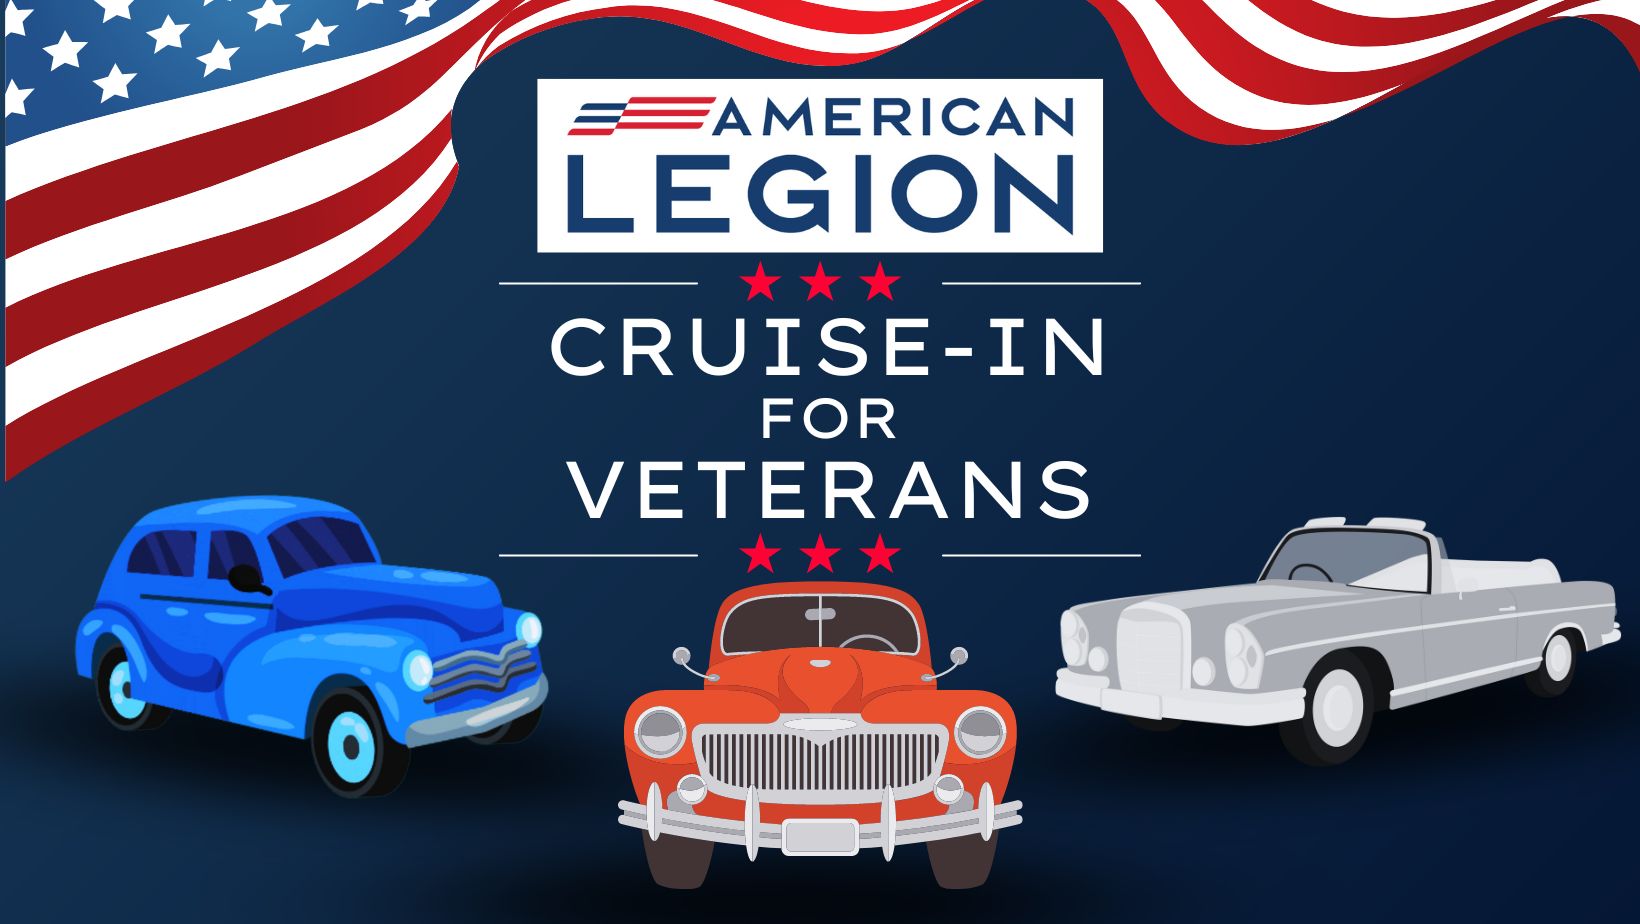 American Legion Cruise-In for Veterans